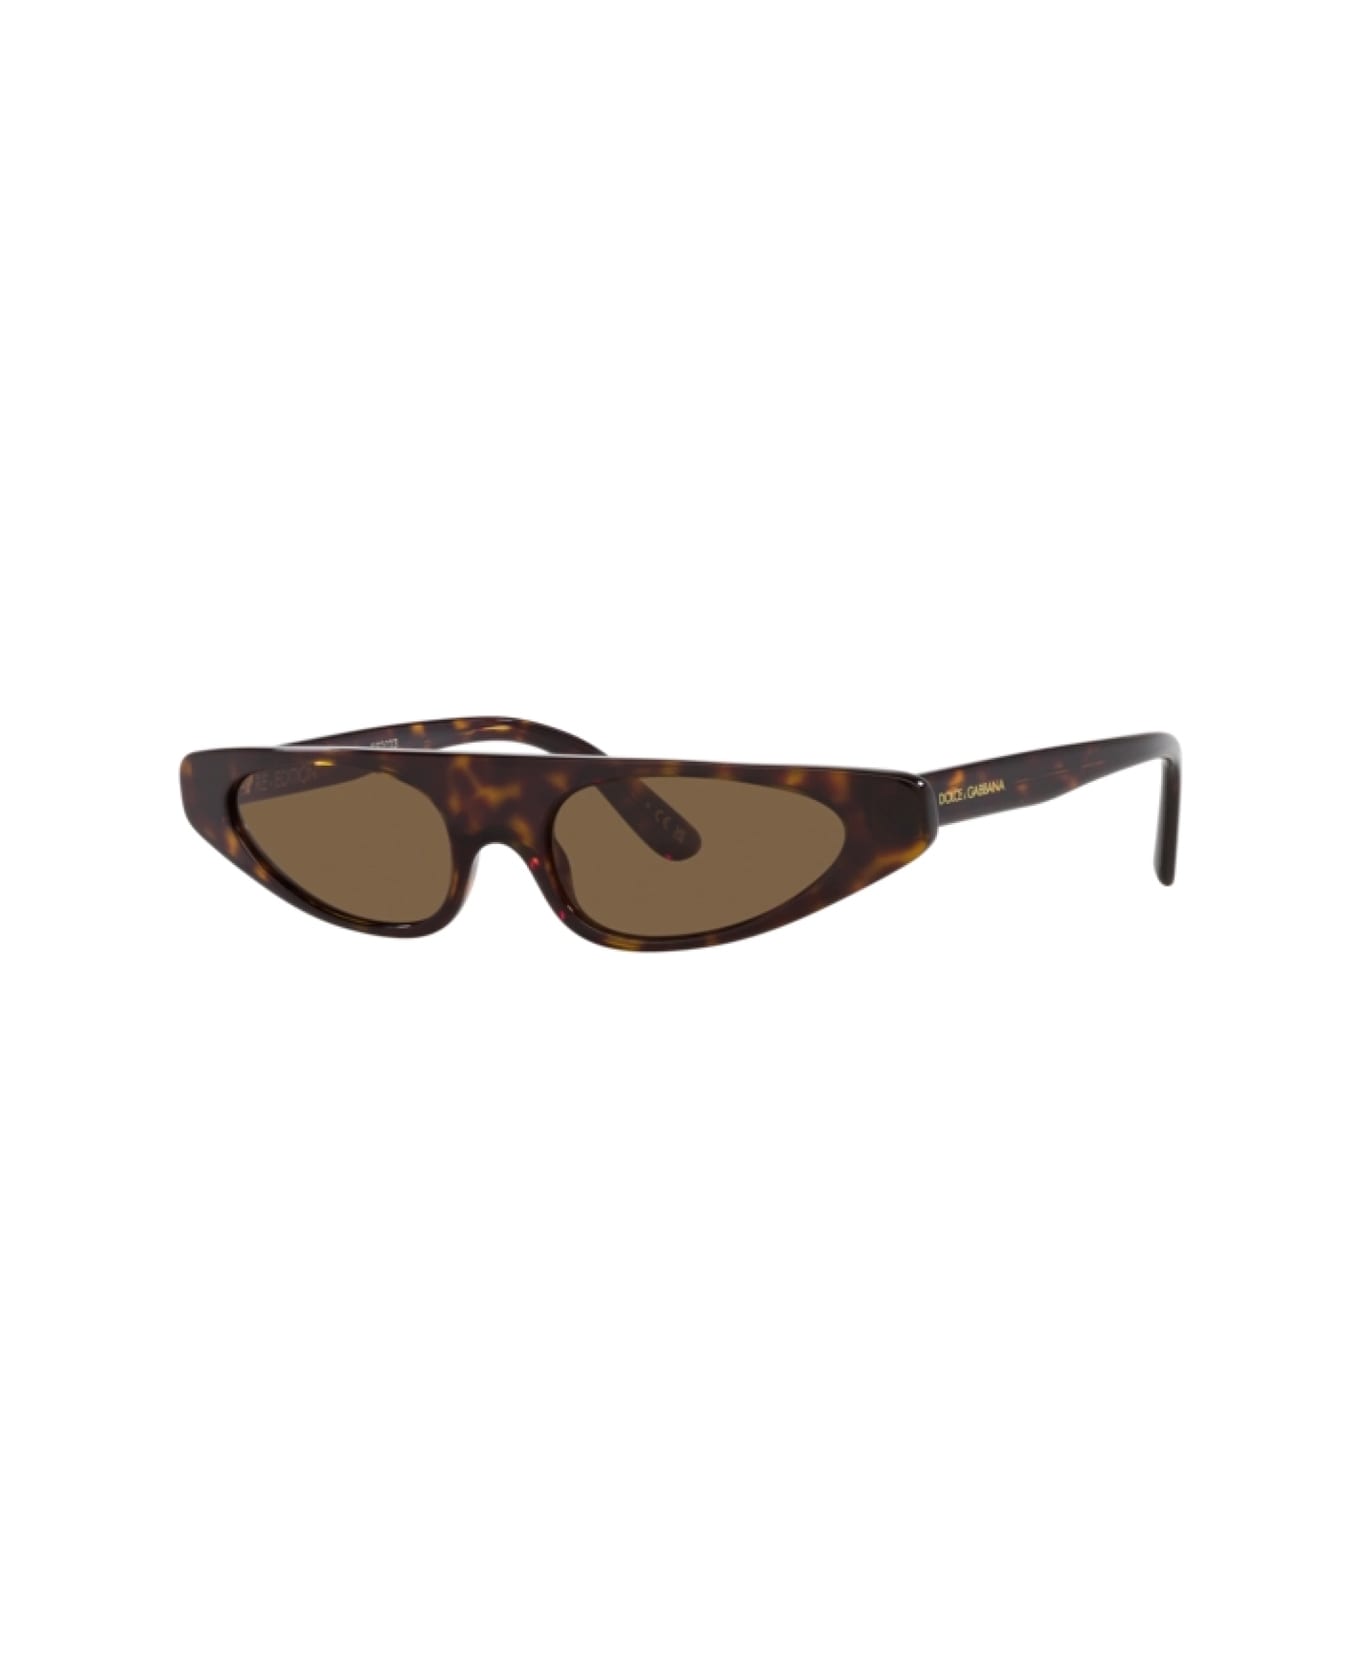 Dolce & Gabbana Eyewear Dg4442 502/73 Sunglasses - Marrone サングラス